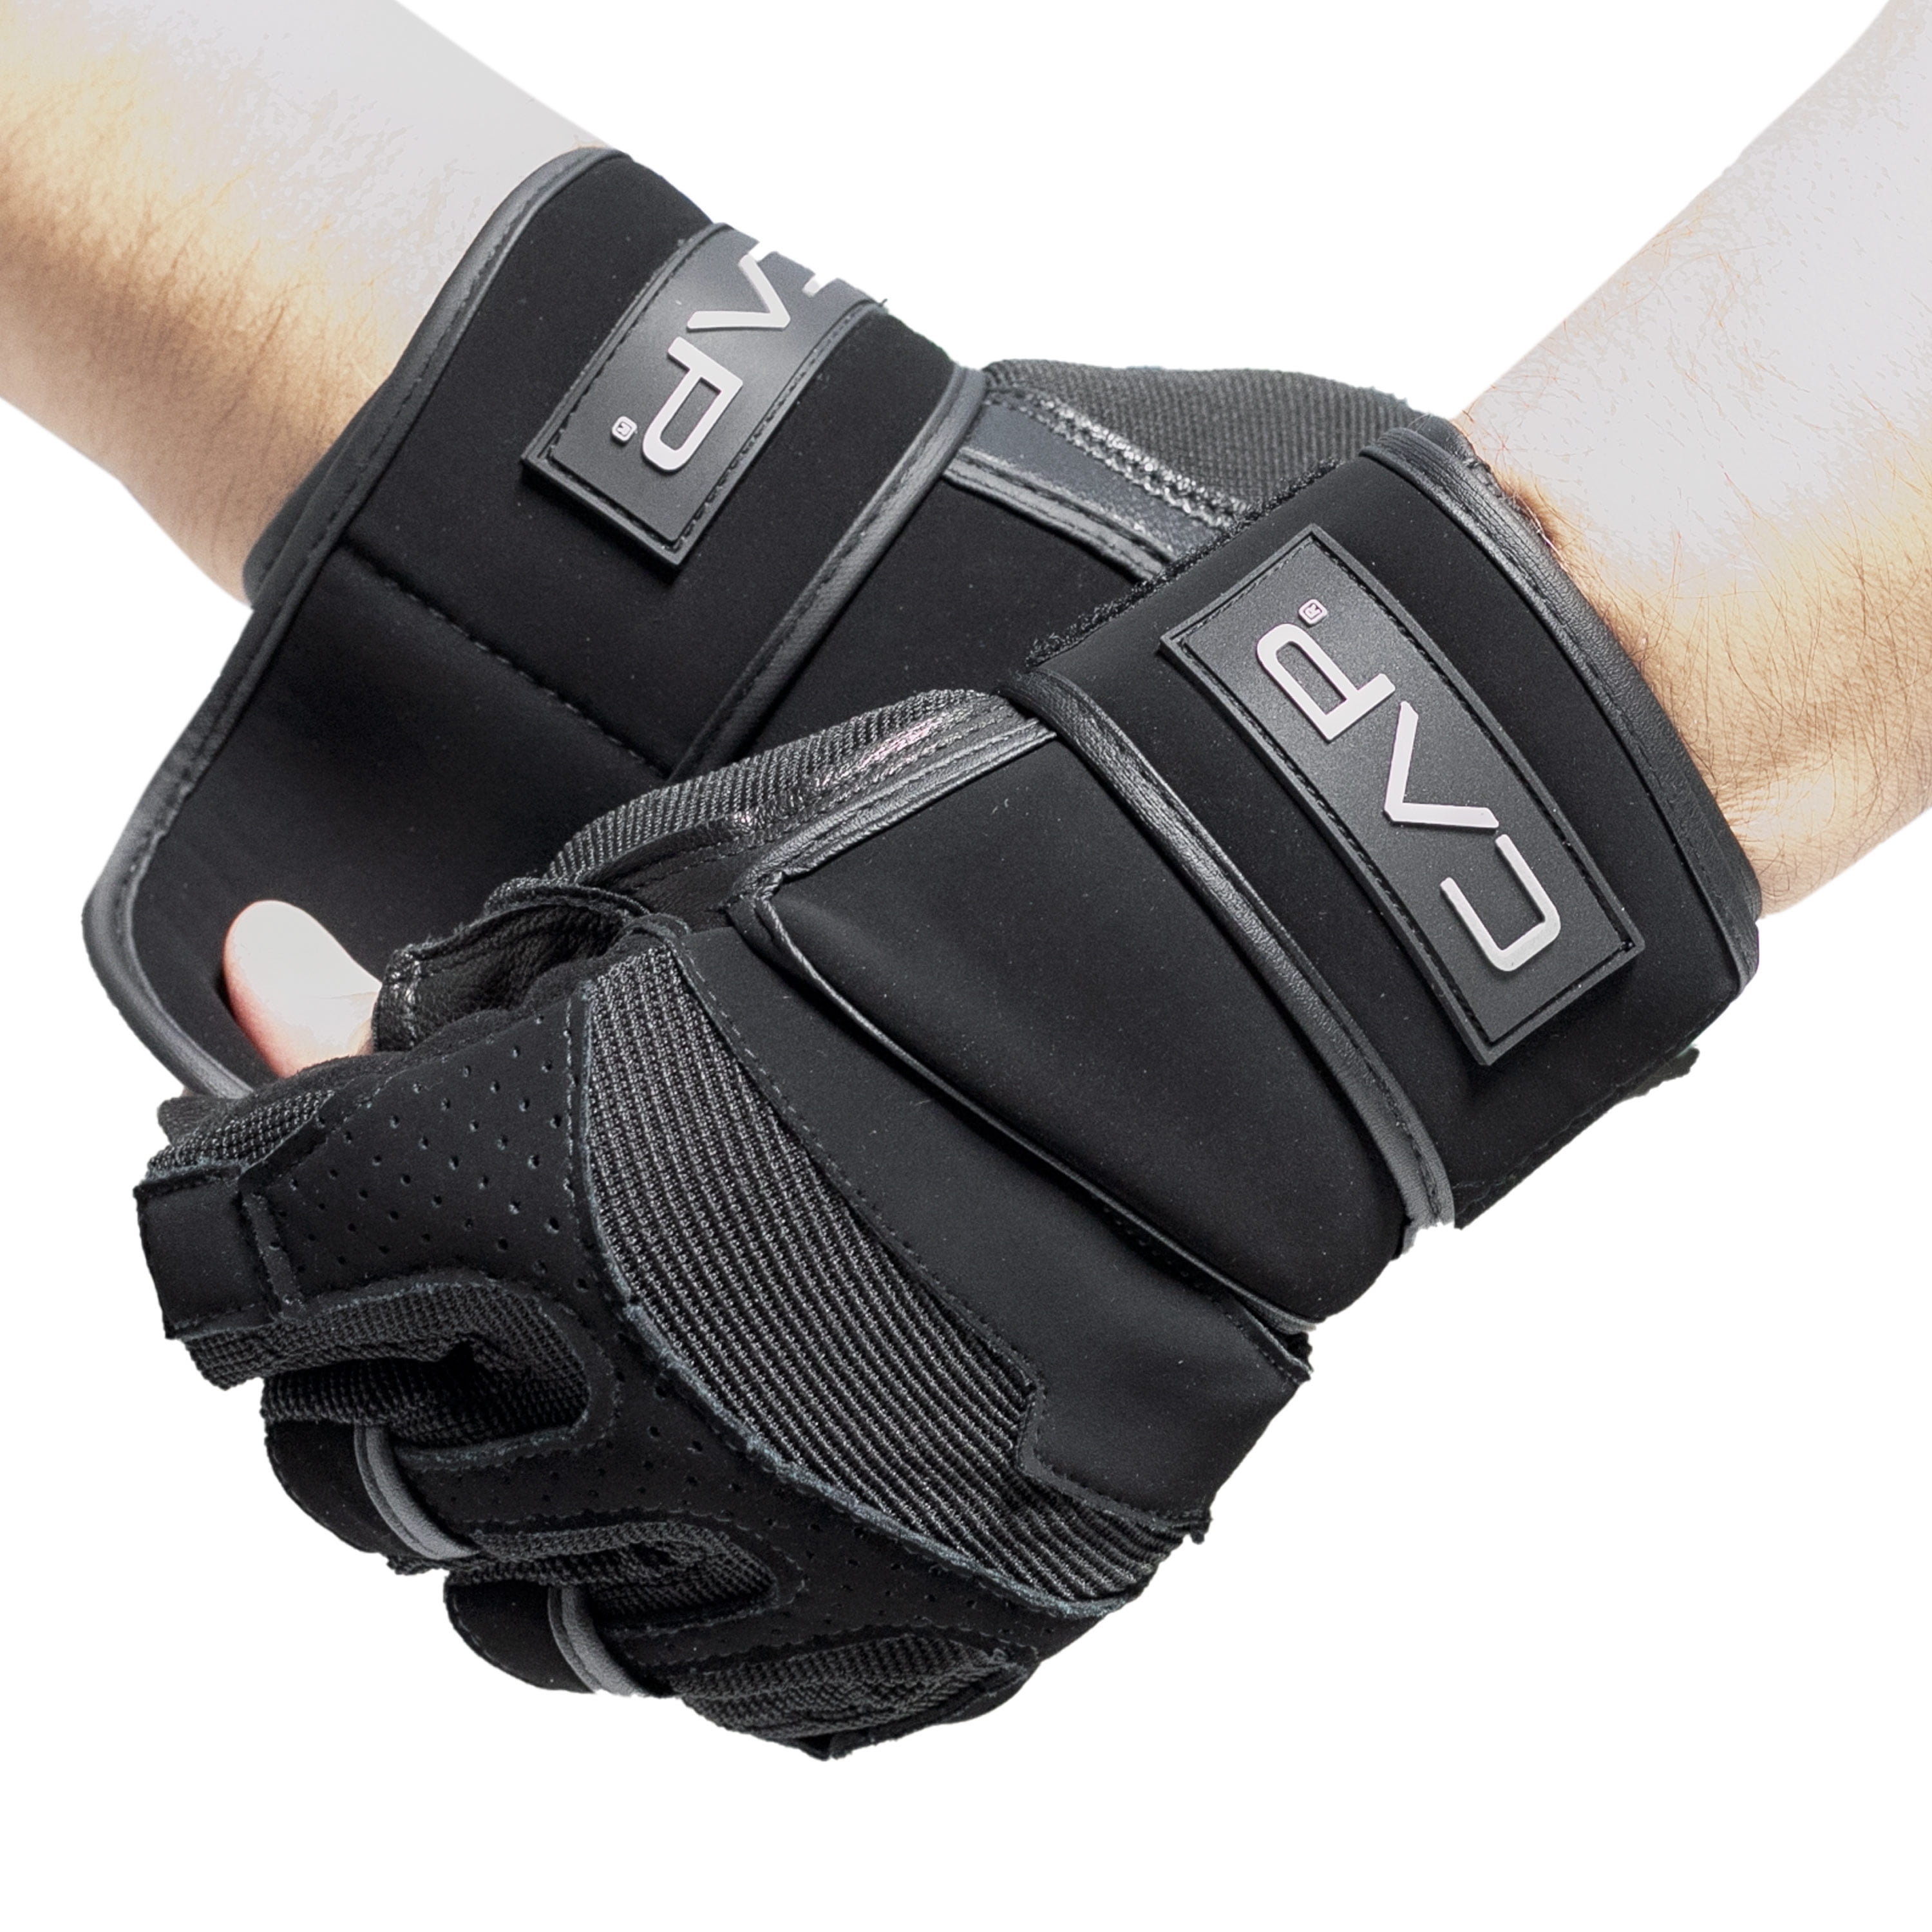 EVO Fitness Weightlifting Gym Straps GEL Padded Wrist Support Strap Cuff Glove 